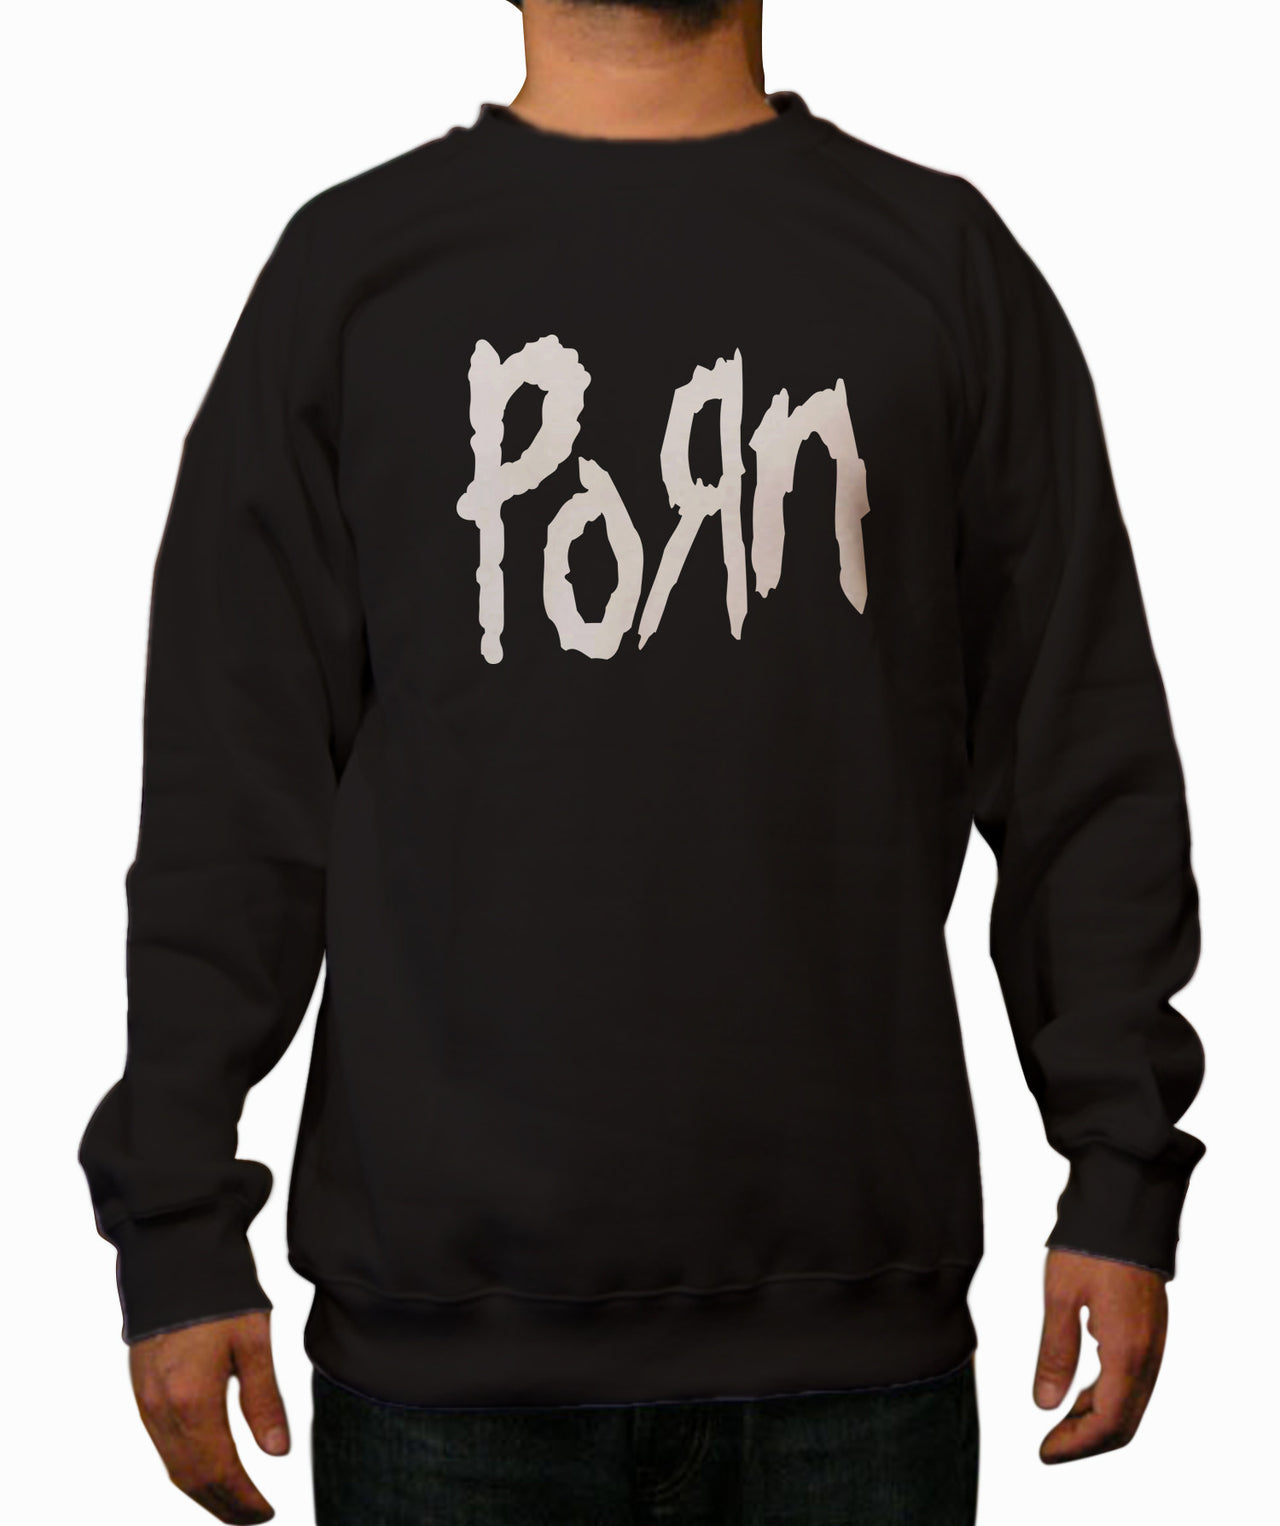 Porn Black Crewneck Sweatshirt - TshirtNow.net - 1